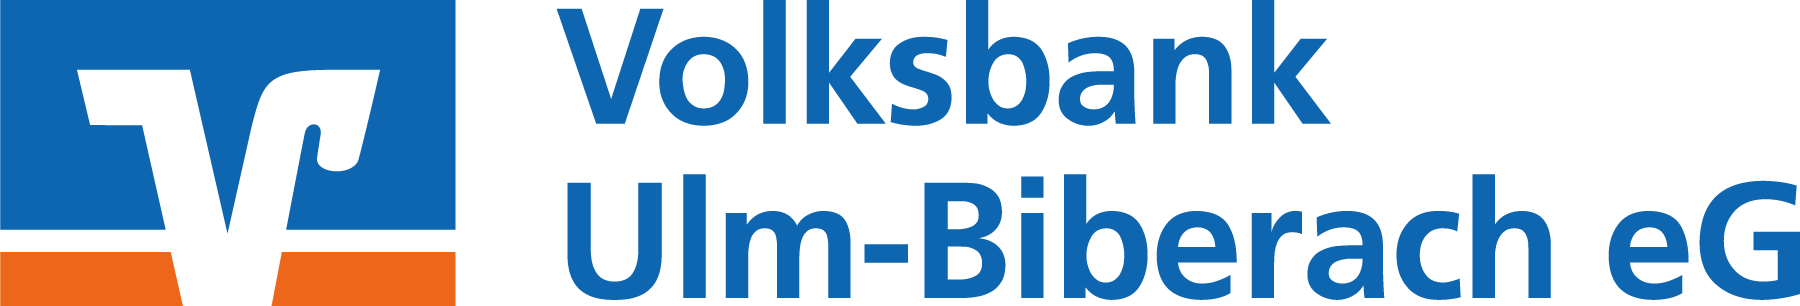 Volksbank Biberach